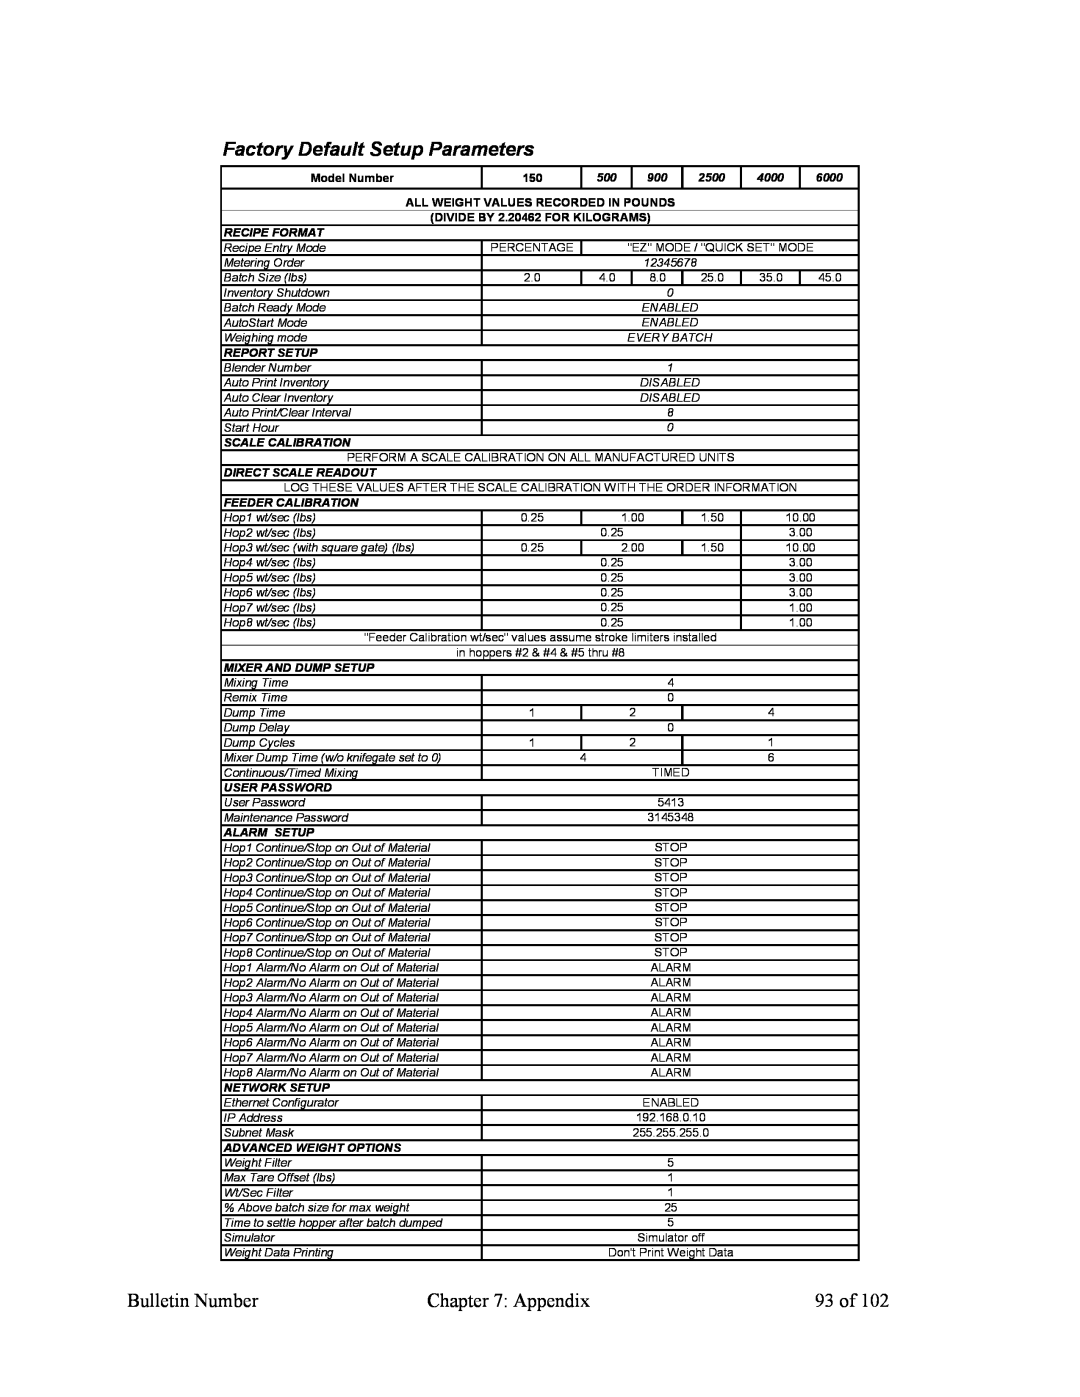 Mitsubishi Electronics 882.00207.00 specifications Factory Default Setup Parameters, Bulletin Number, Appendix, 93 of 